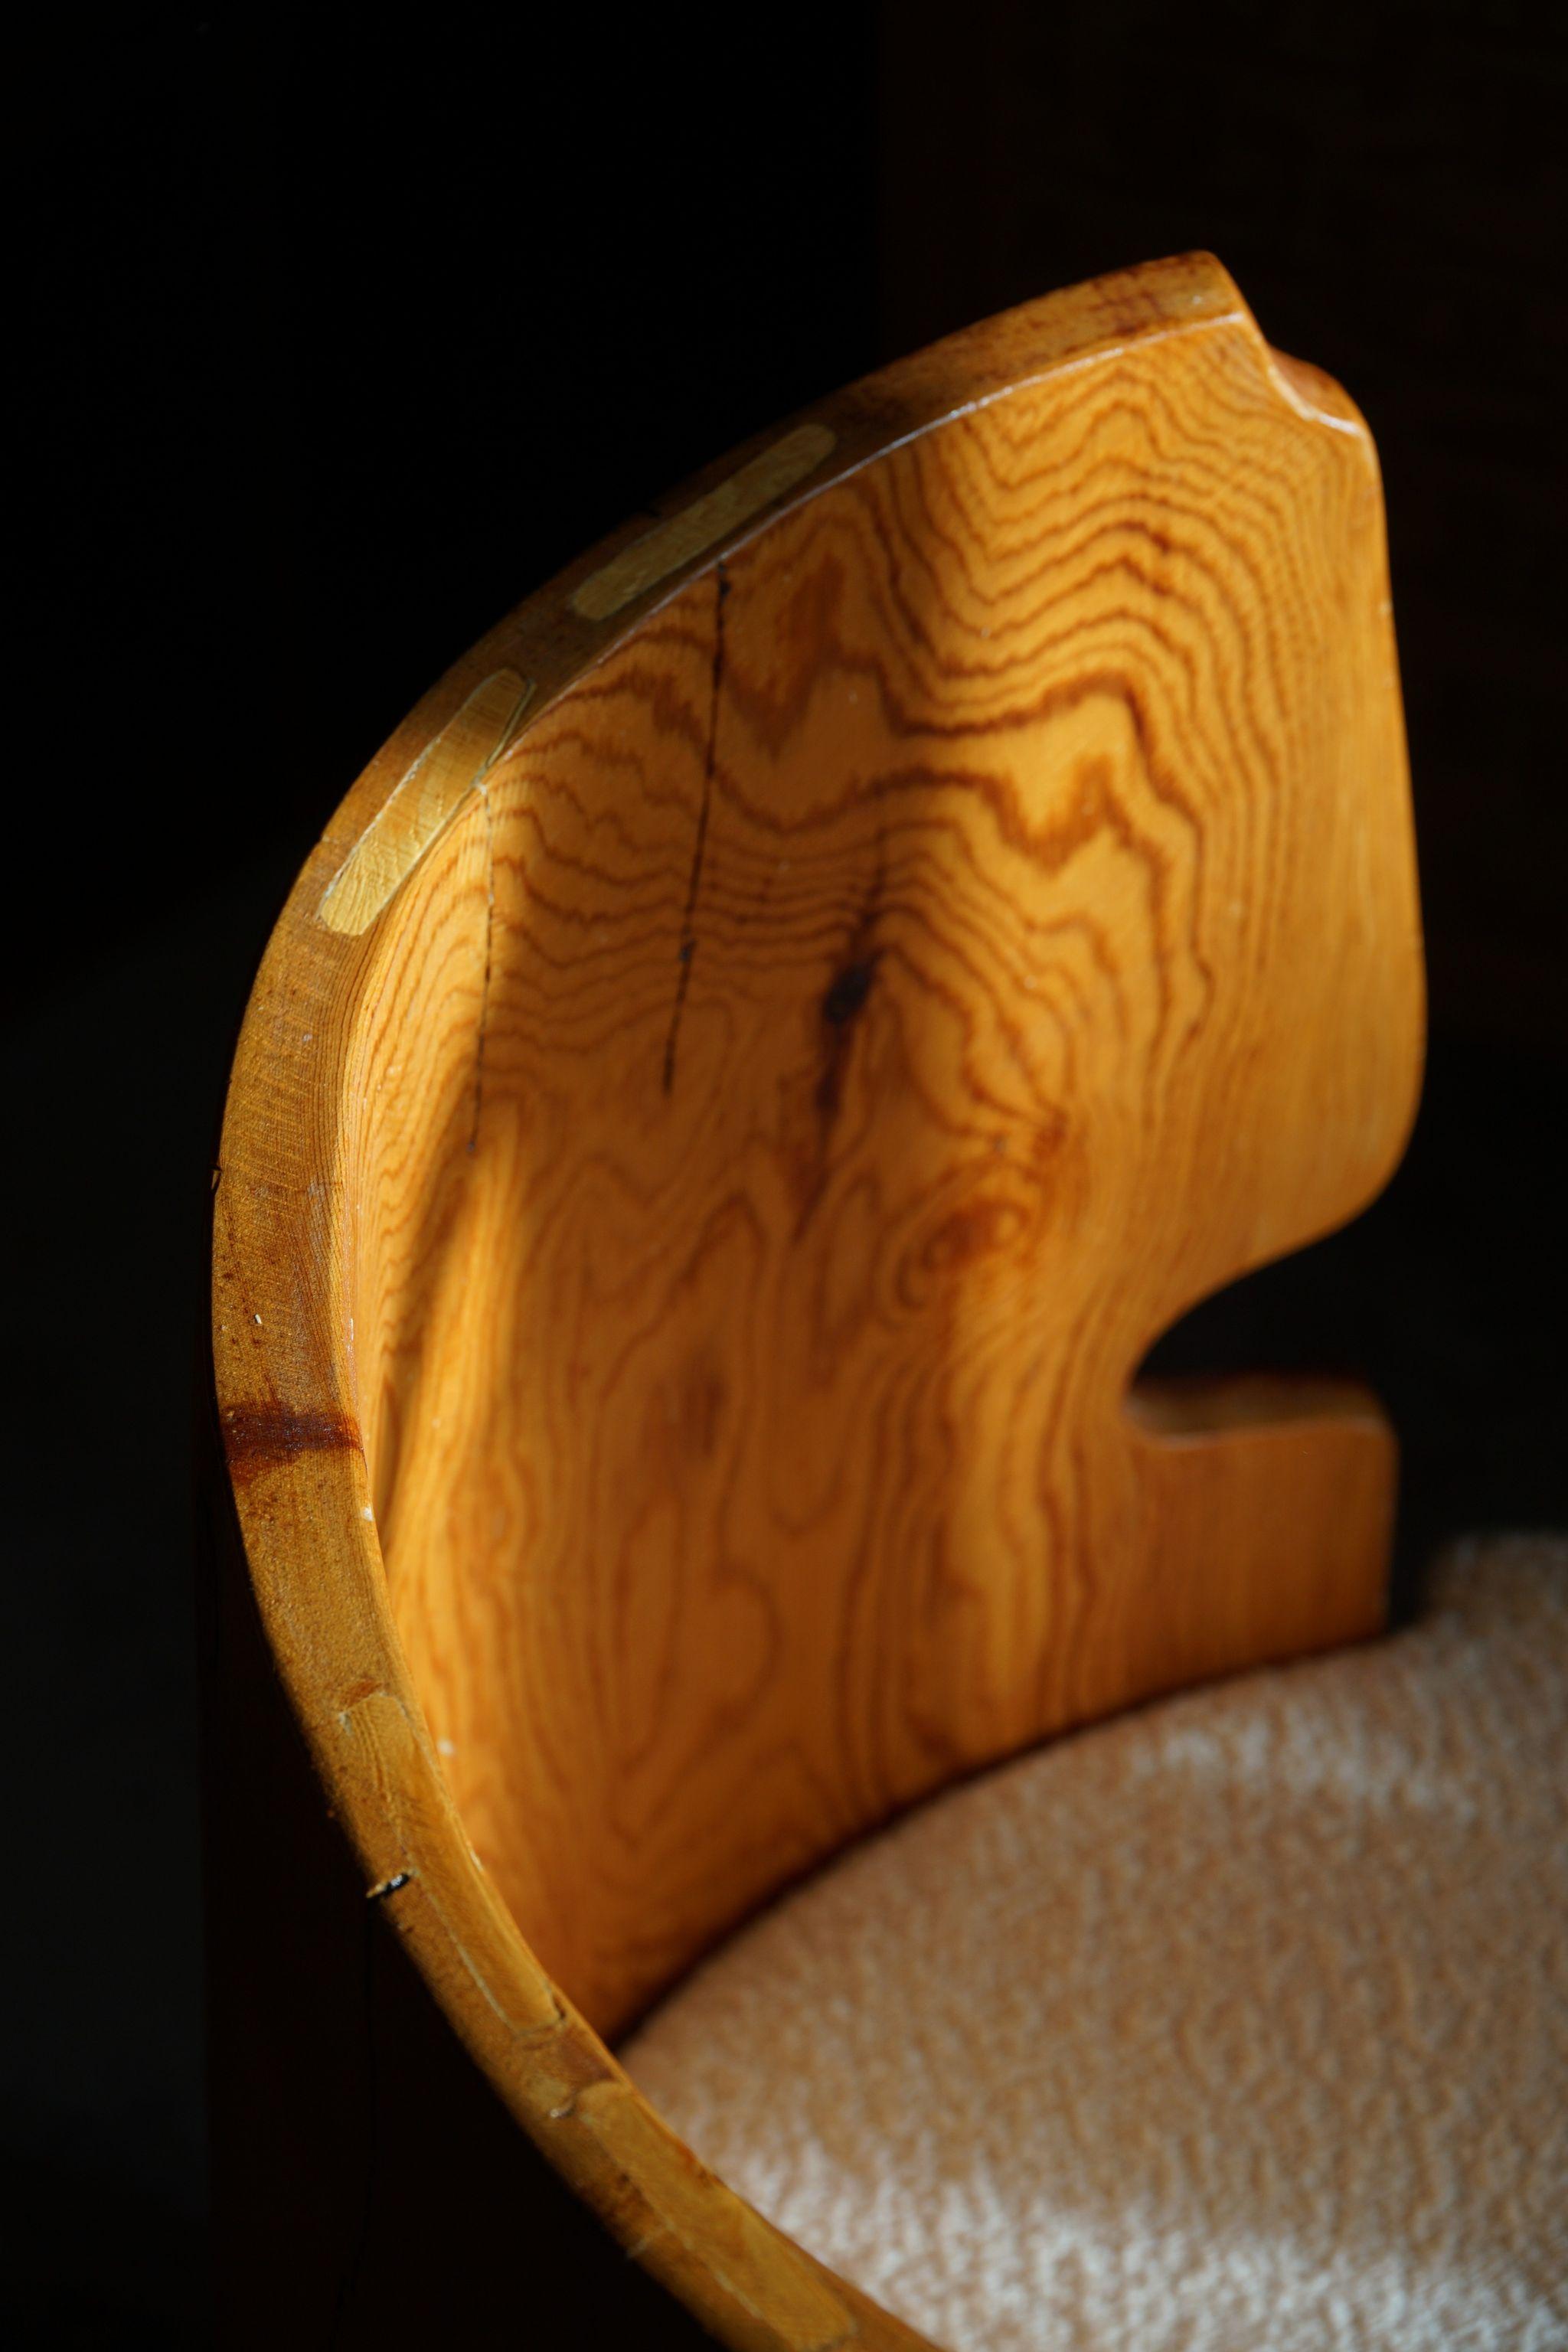 Sculptural Carved Wabi Sabi Brutalist Stump Chair in Solid Pine, Swedish, 1970s For Sale 1